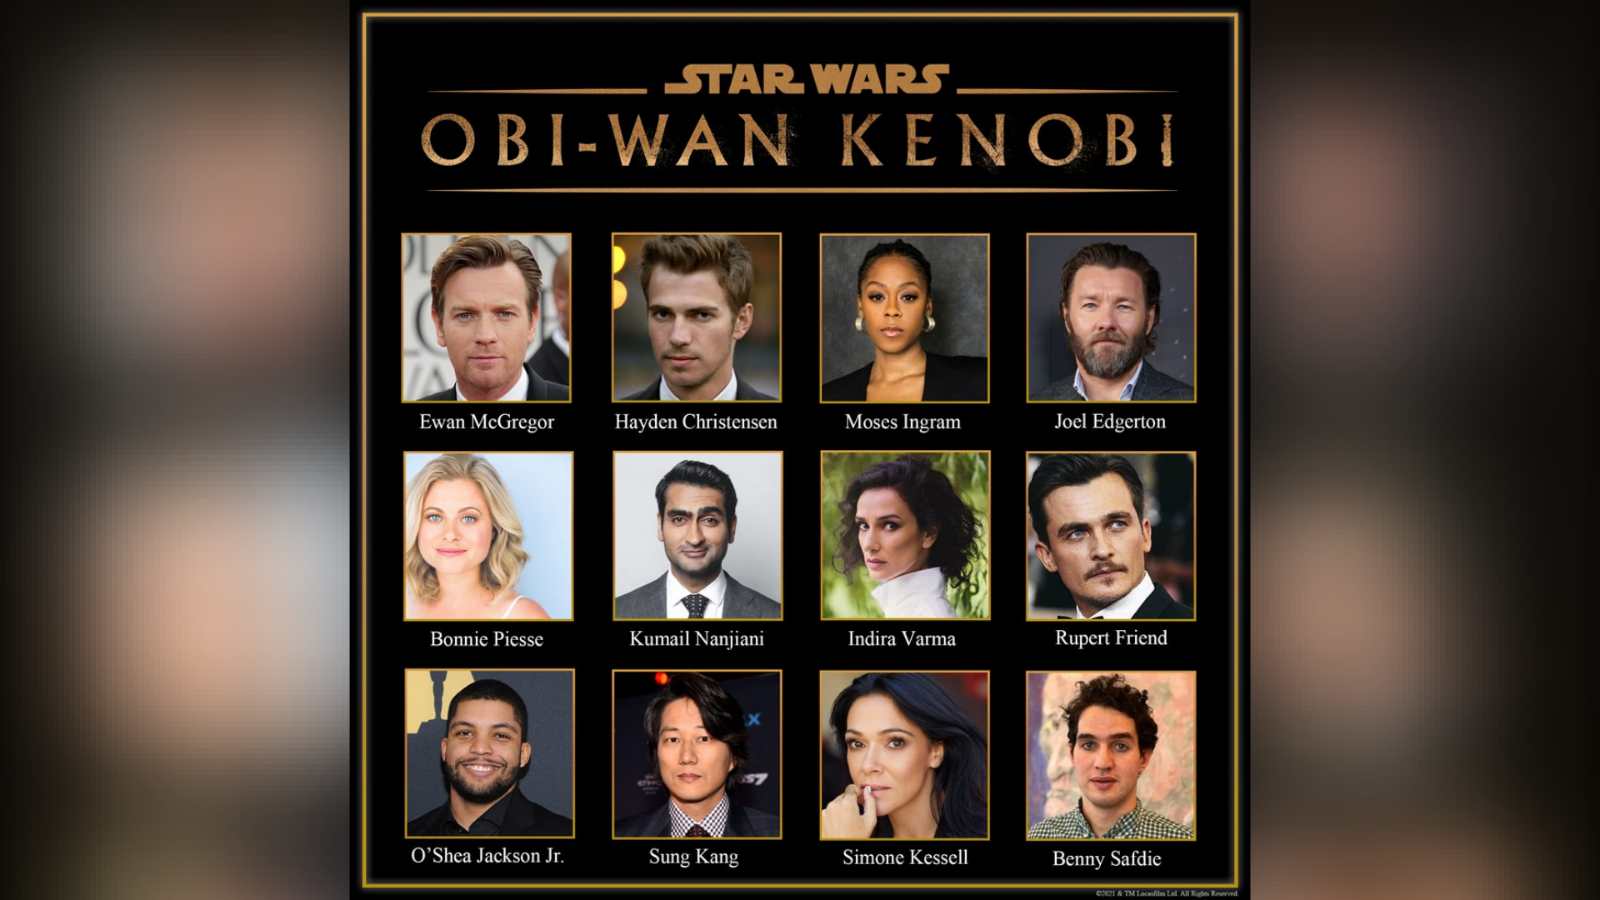 Obi-Wan Kenobi cast